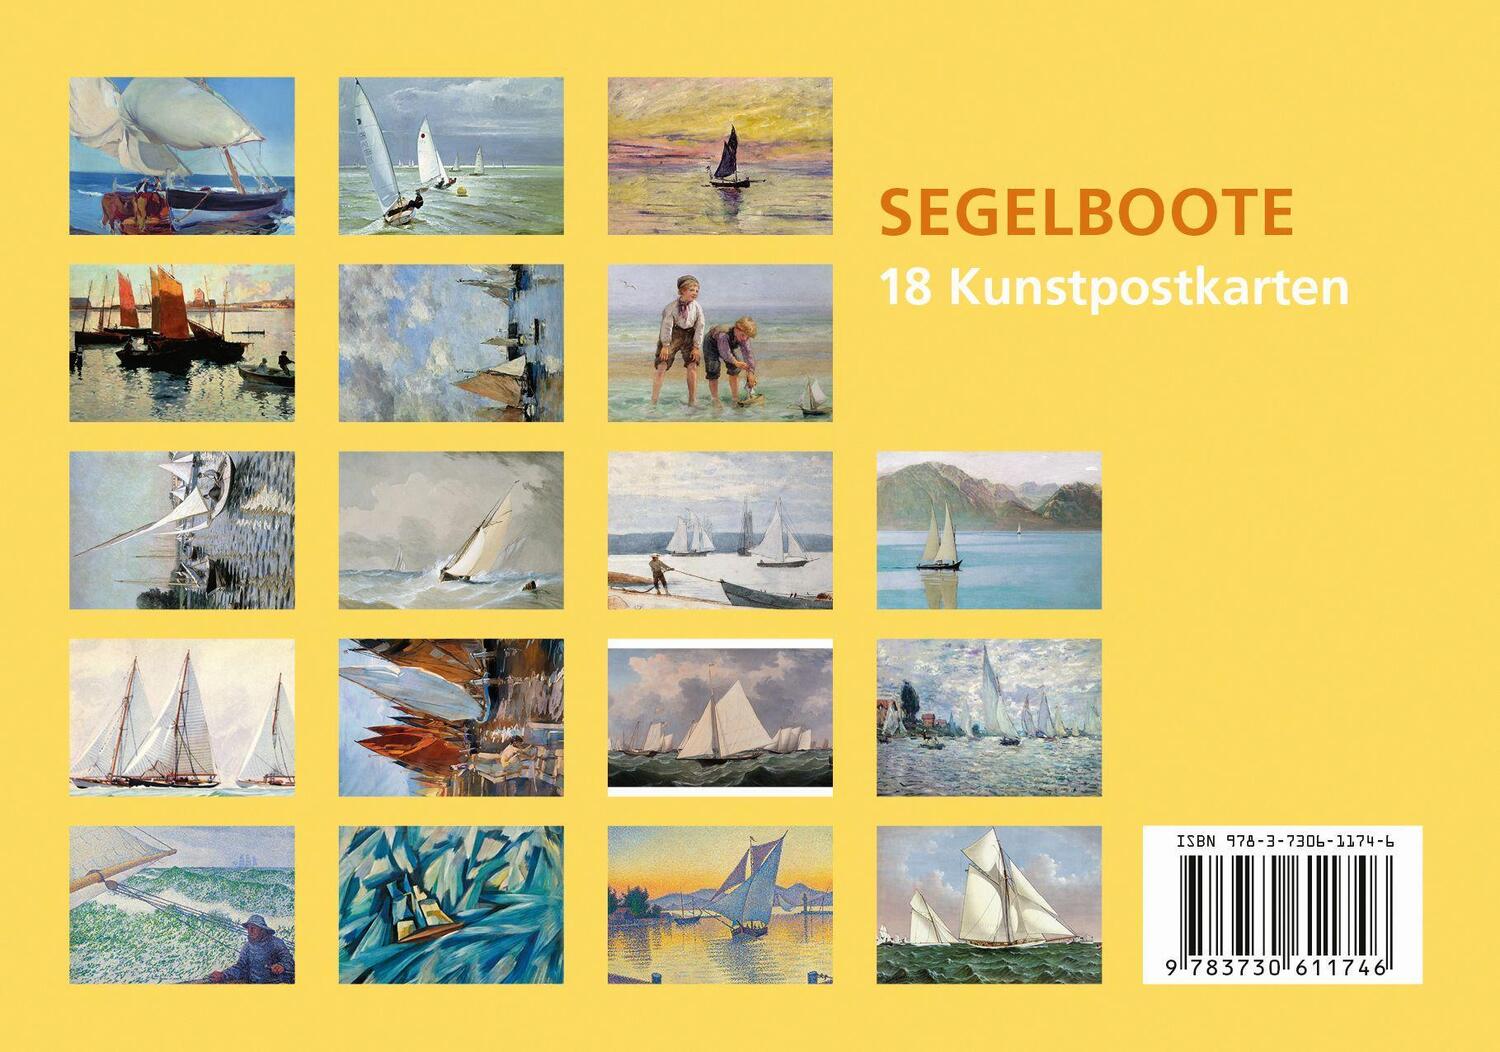 Bild: 9783730611746 | Postkarten-Set Segelboote | 18 Kunstpostkarten | Anaconda Verlag